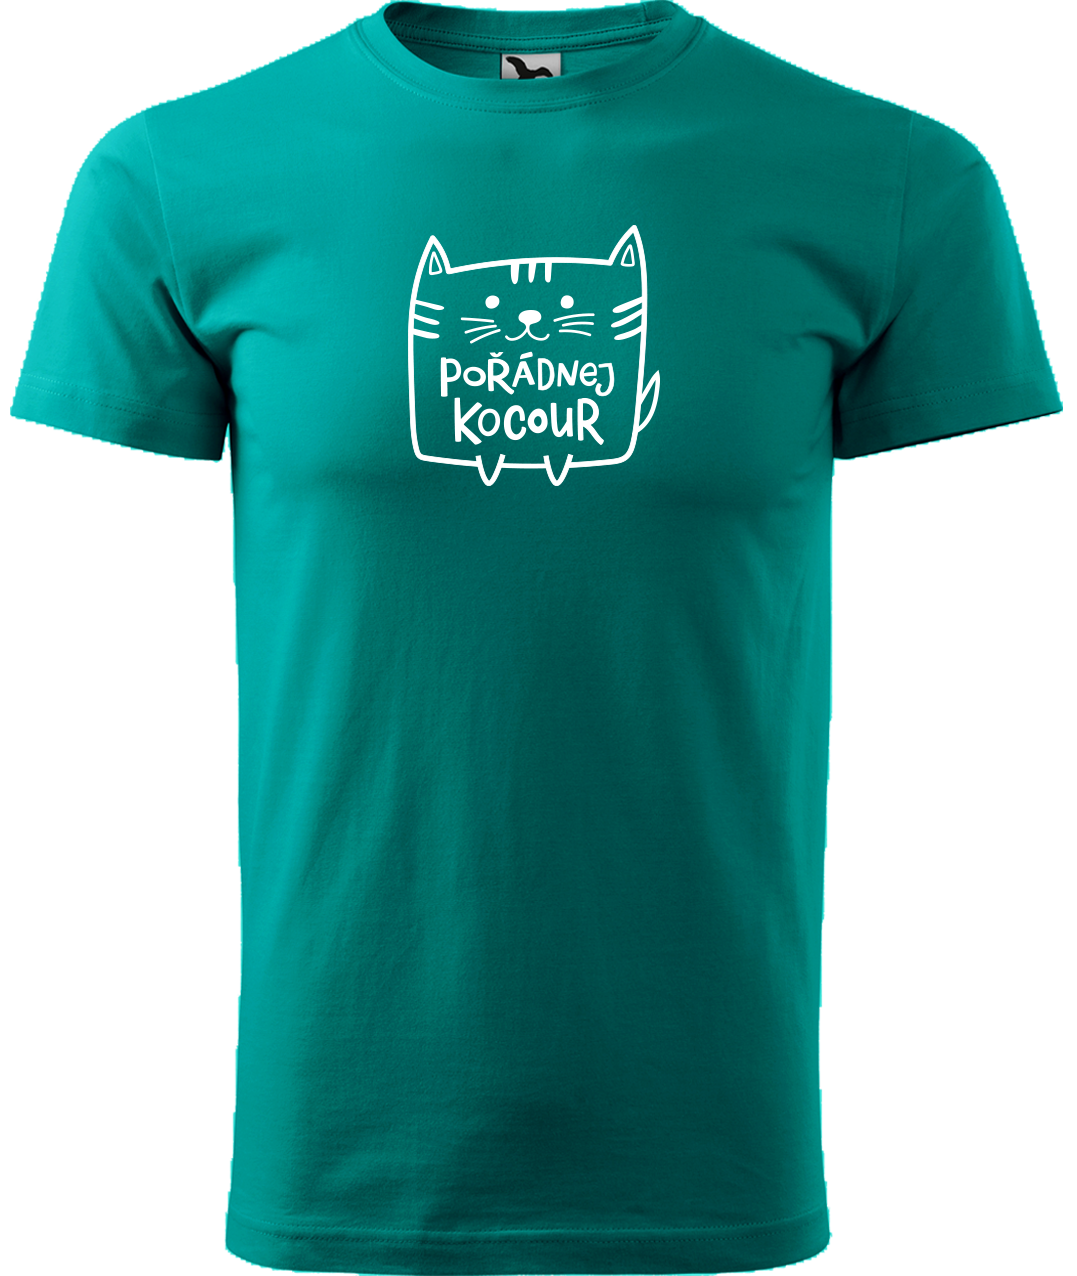 Pánské tričko s kočkou - Pořádnej kocour Velikost: M, Barva: Emerald (19)